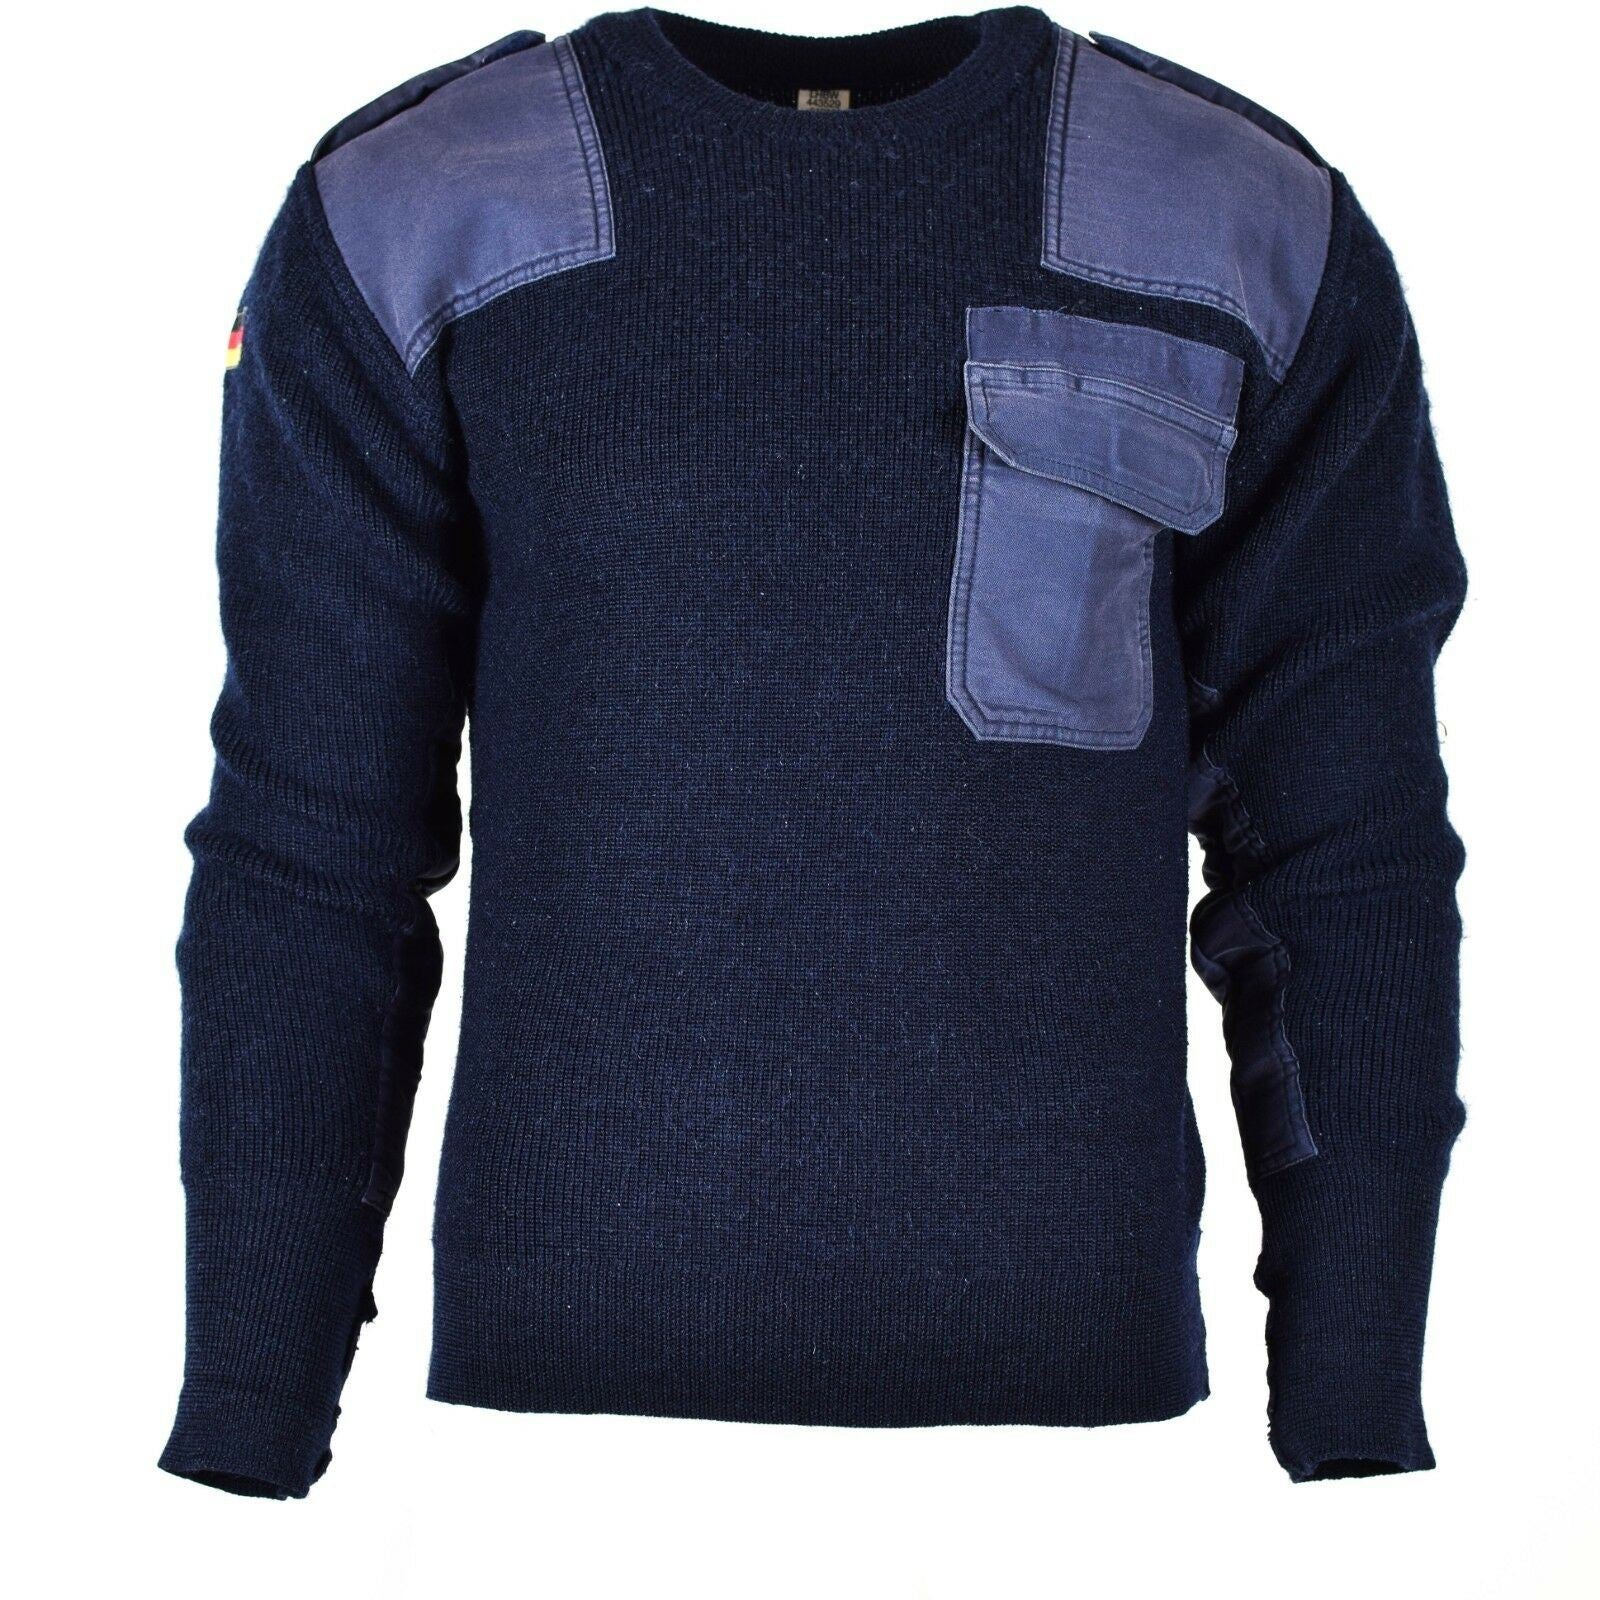 Original German Army Pullover Commando Jumper Blue Navy Sweater Wool Military Medium (50)